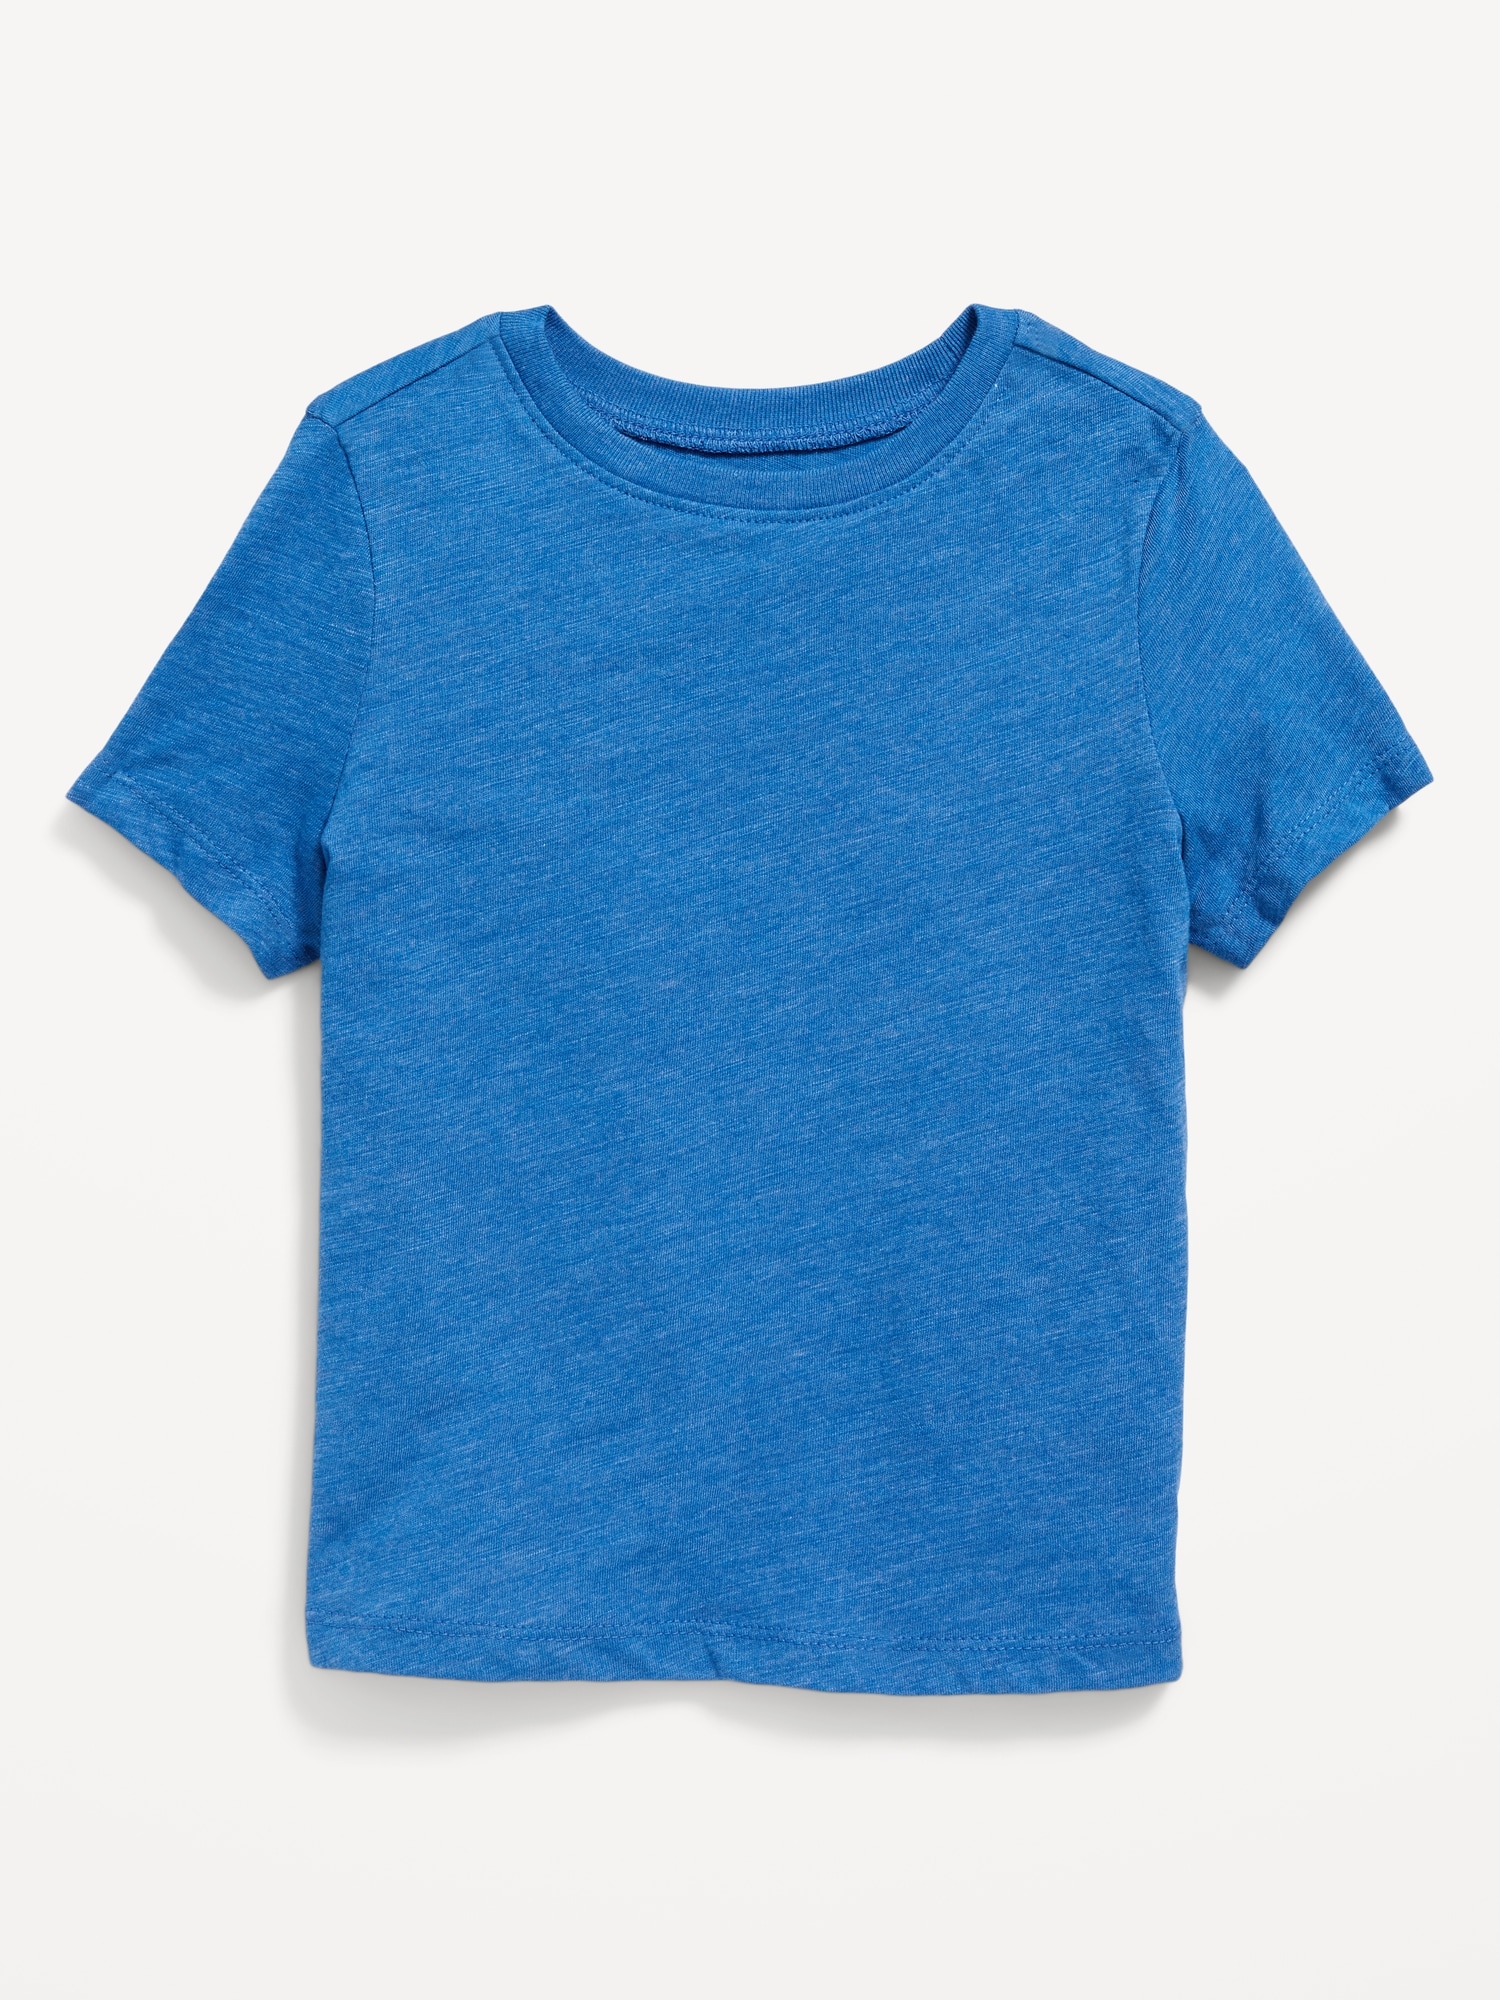 Unisex Slub-Knit Crew-Neck T-Shirt for Toddler | Old Navy